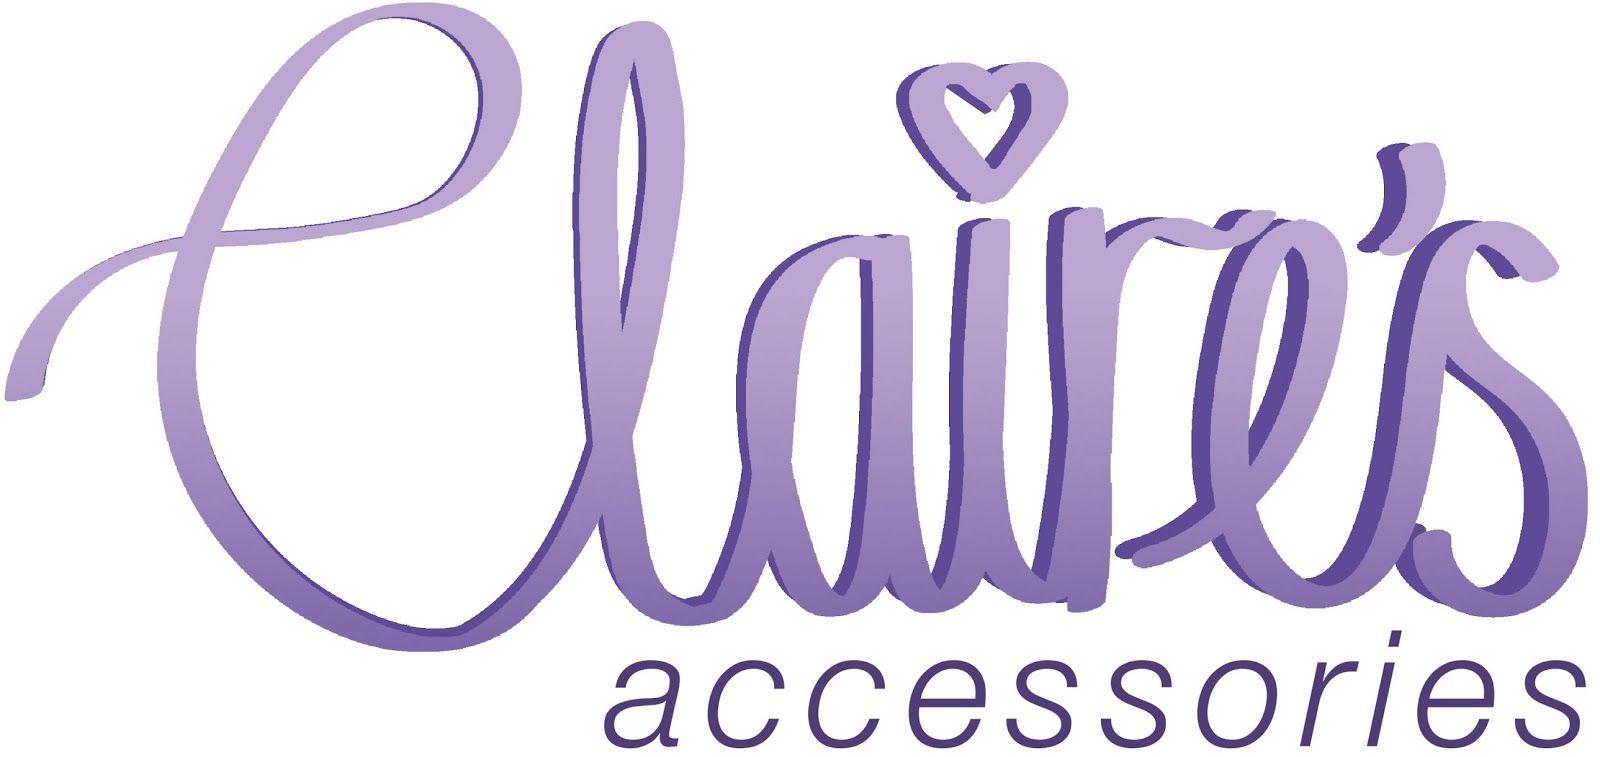 Claries Logo - Studio Practice: Logotype - Claire's Accessories